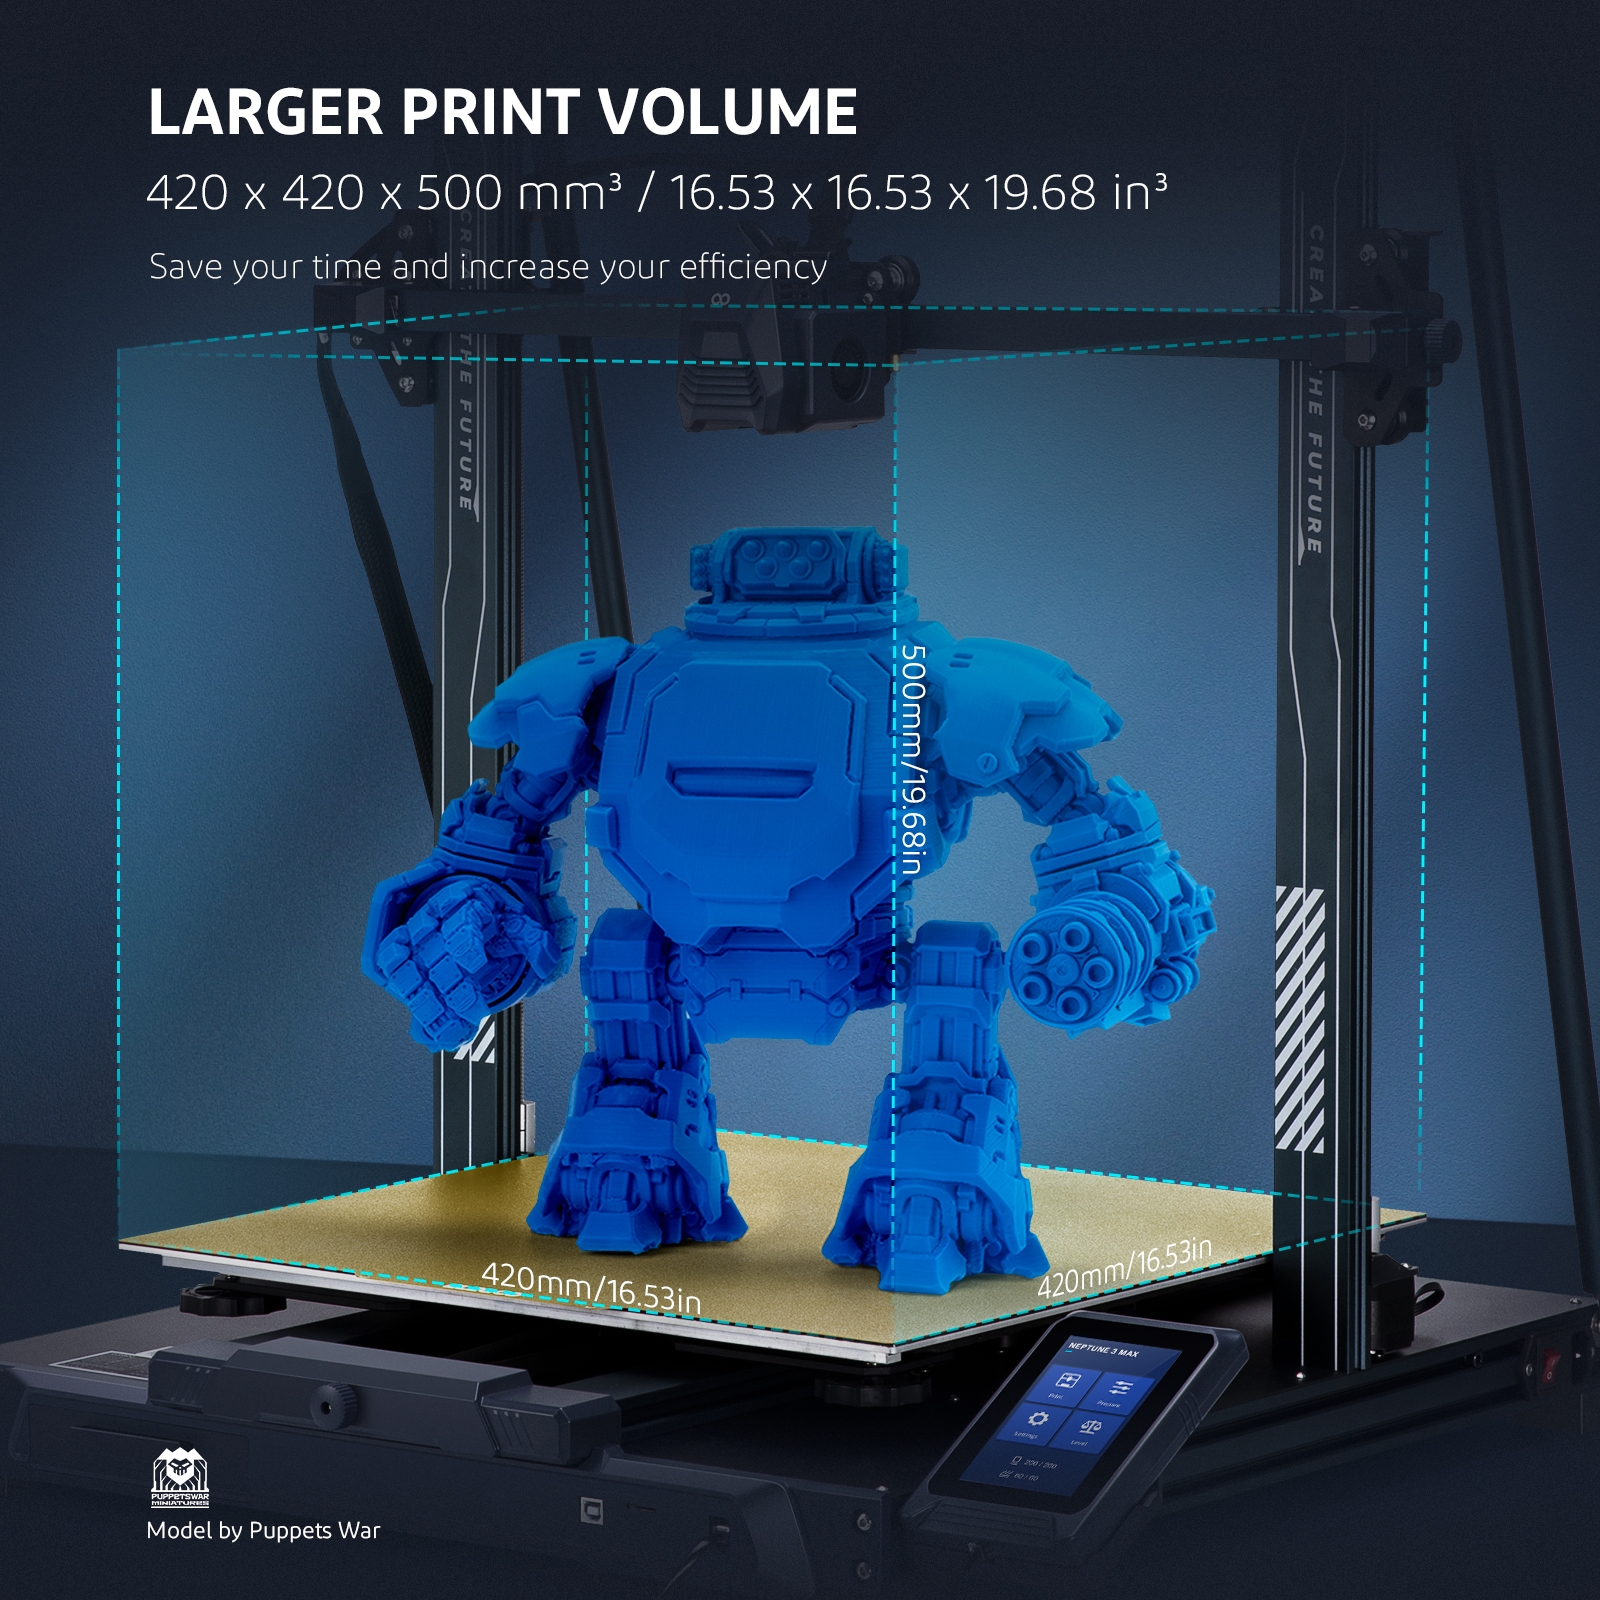 Buy Protomont TECHNOLOGIES ELEGOO ABS-Like 3D Printer Standard